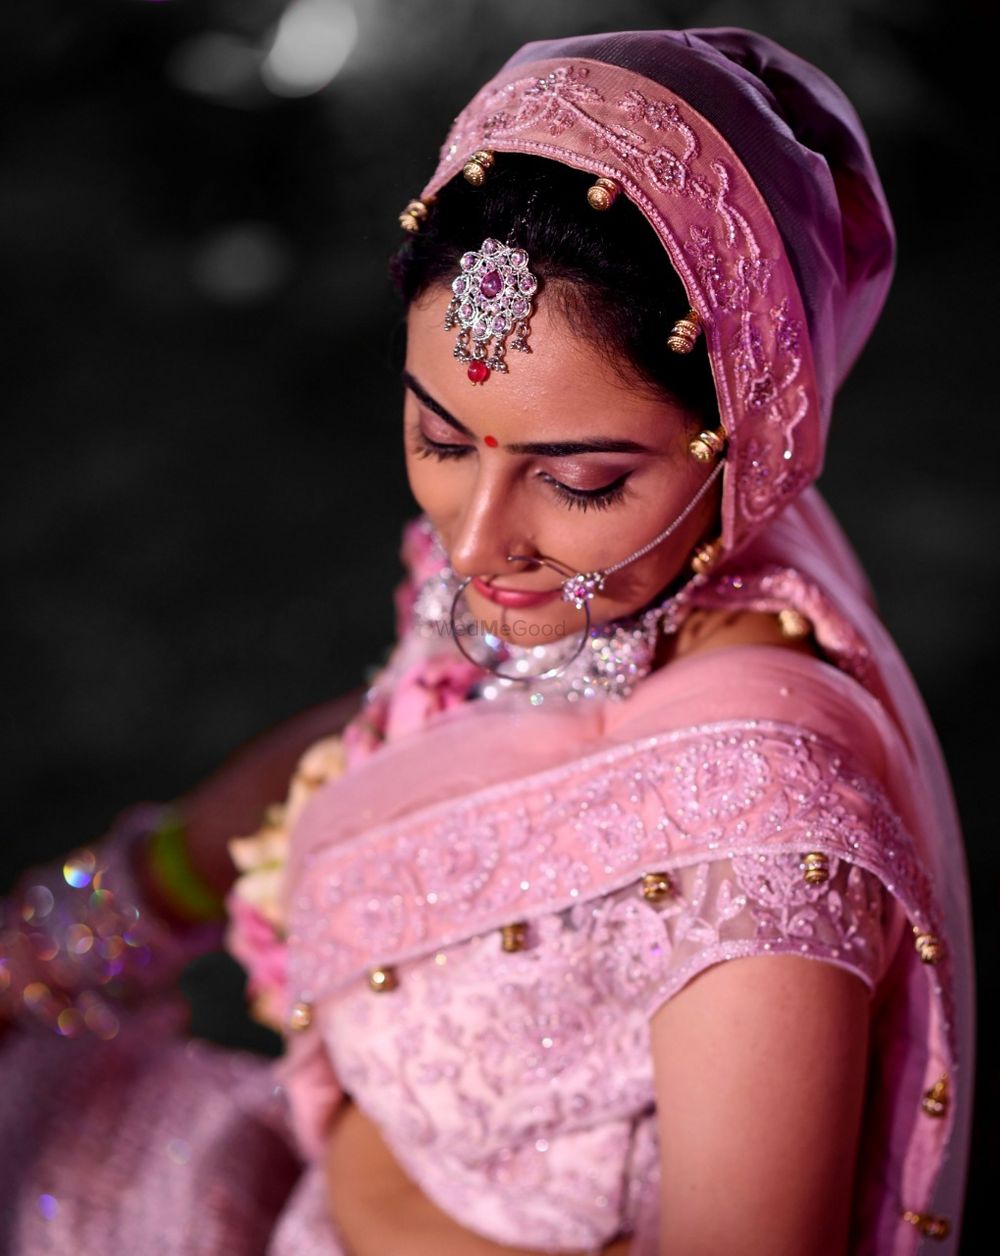 Photo By Transformation By Supriya Mishra - Bridal Makeup